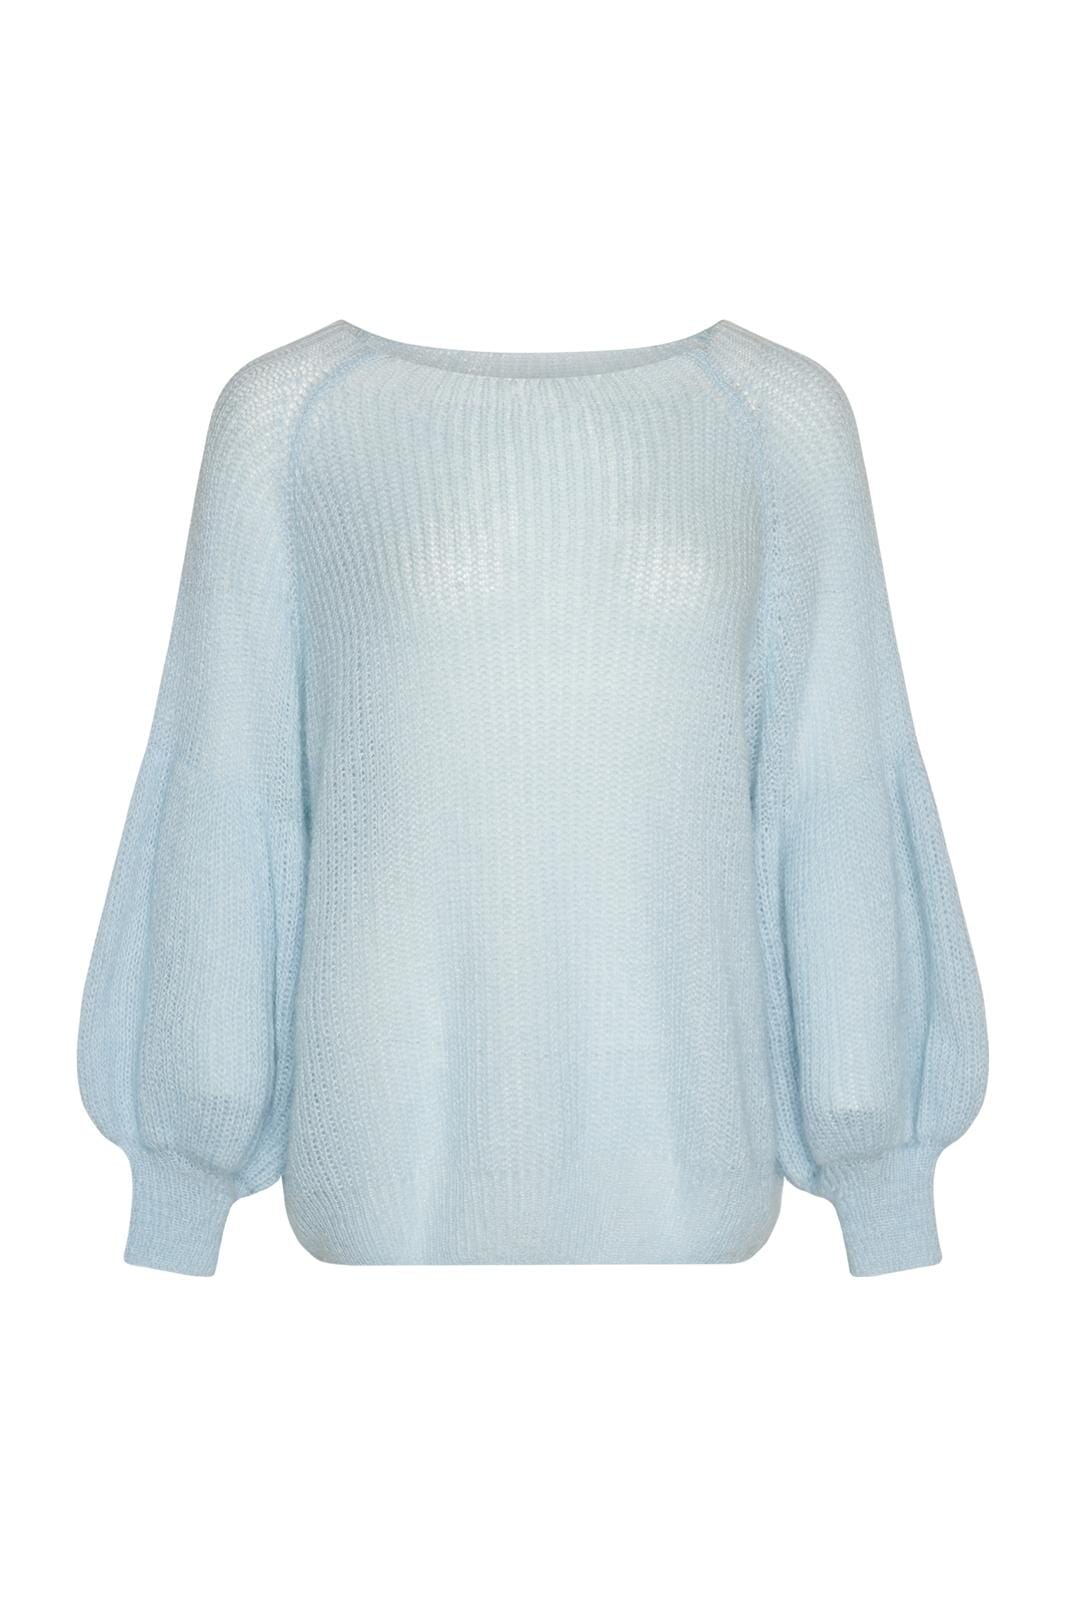 Noella - Miko Knit Sweater - 016 Light Blue